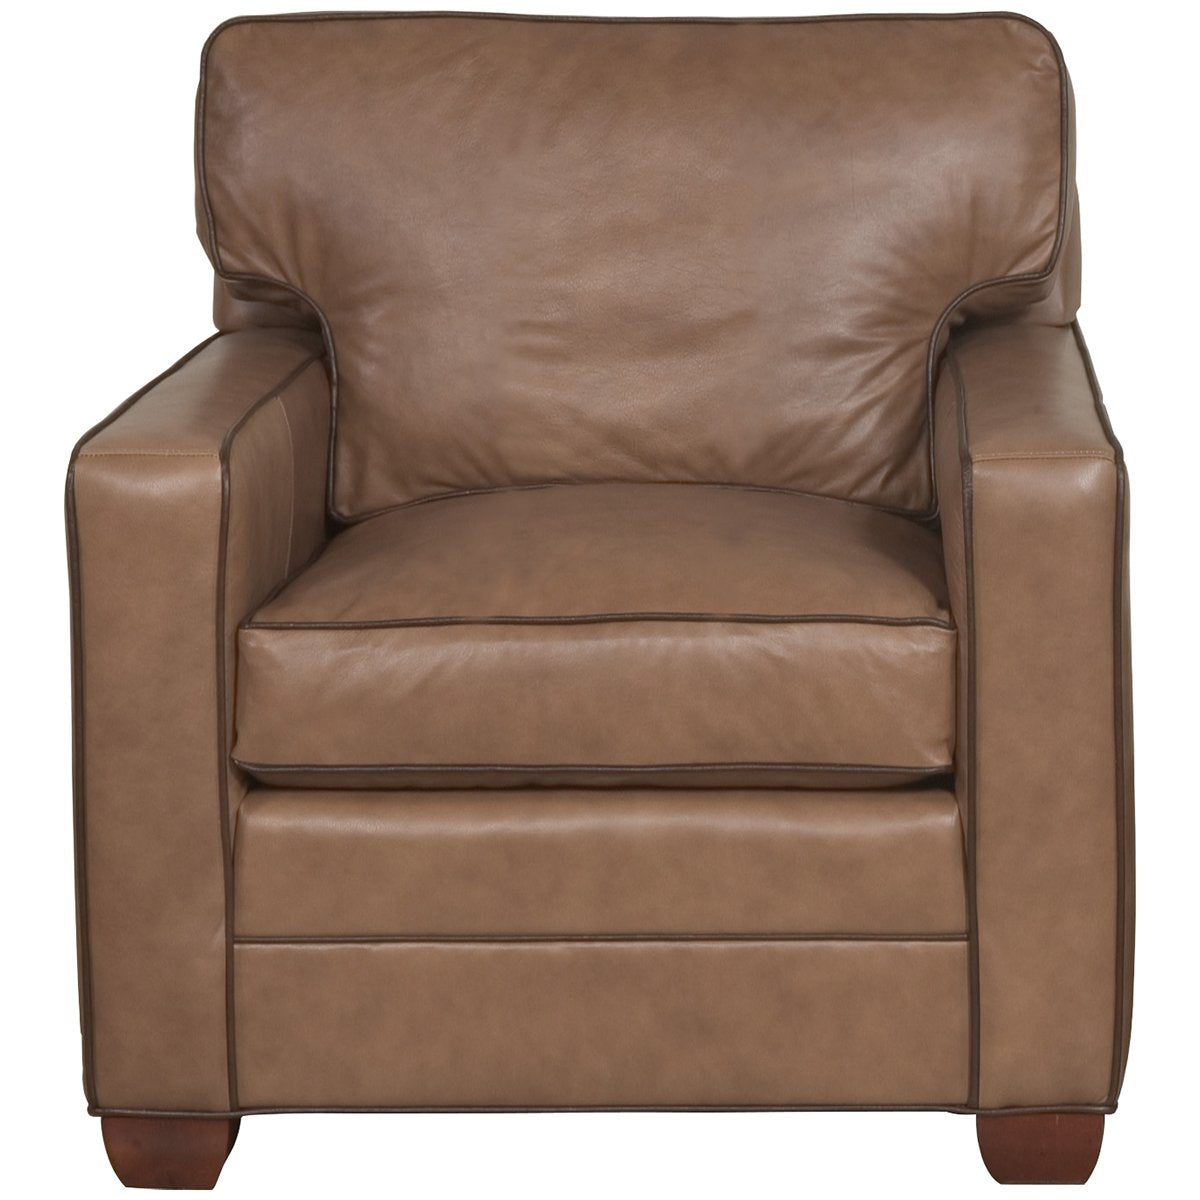 Vanguard Furniture Hillcrest Chair